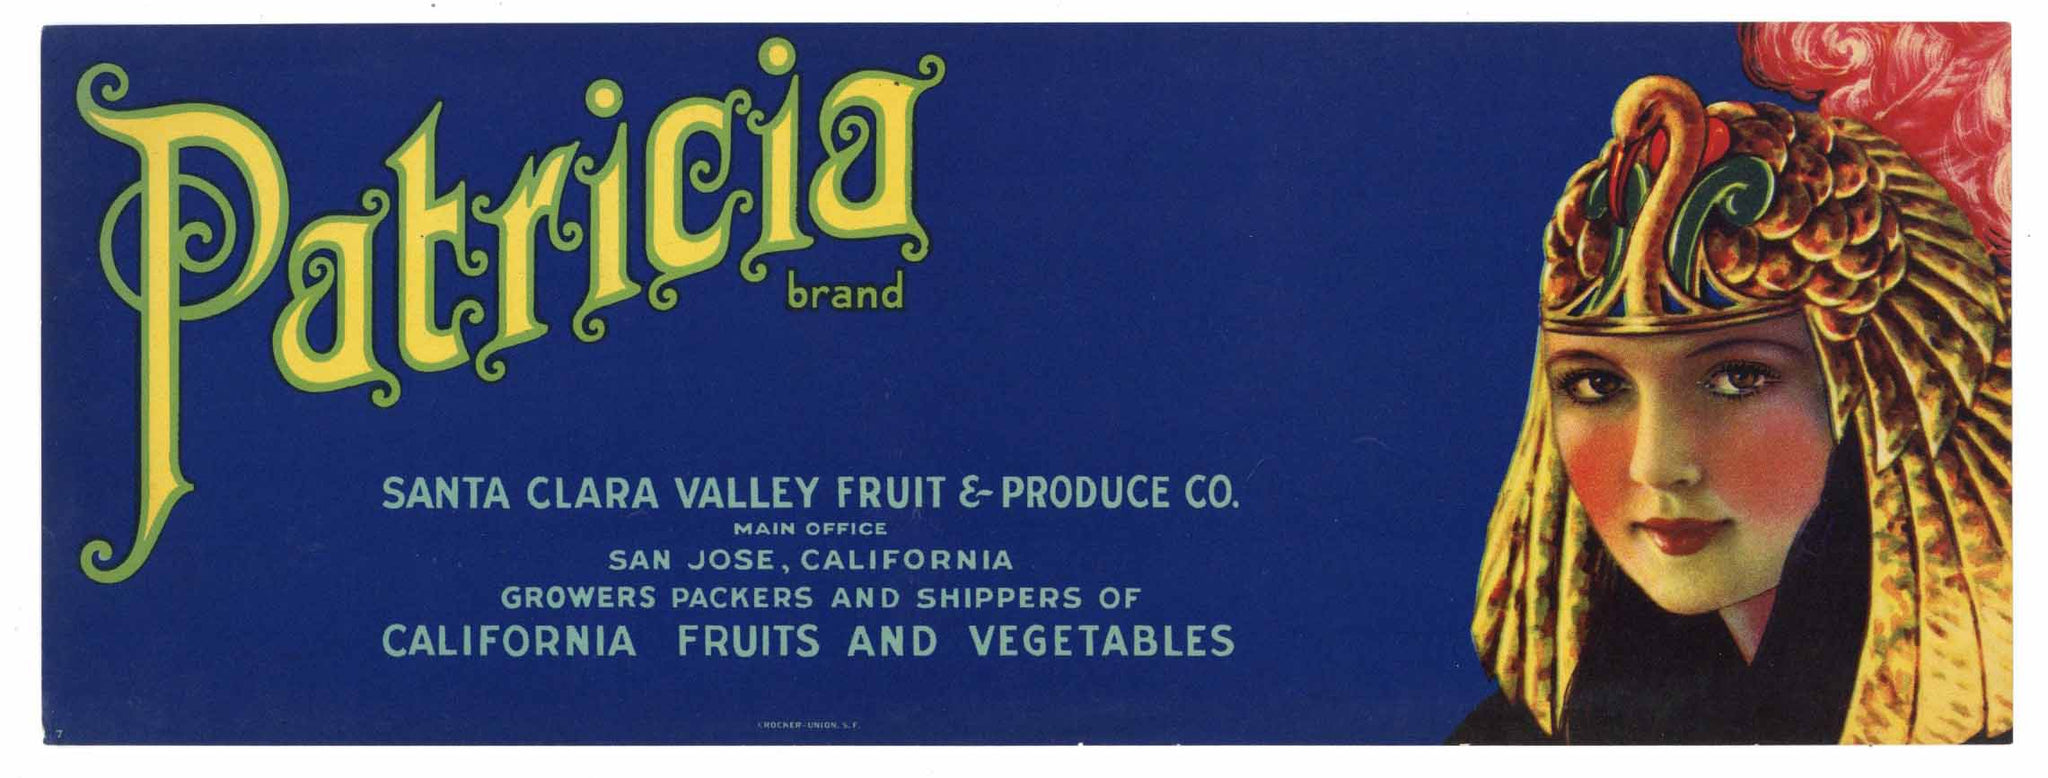 Patricia Brand Vintage Santa Clara Fruit Crate Label